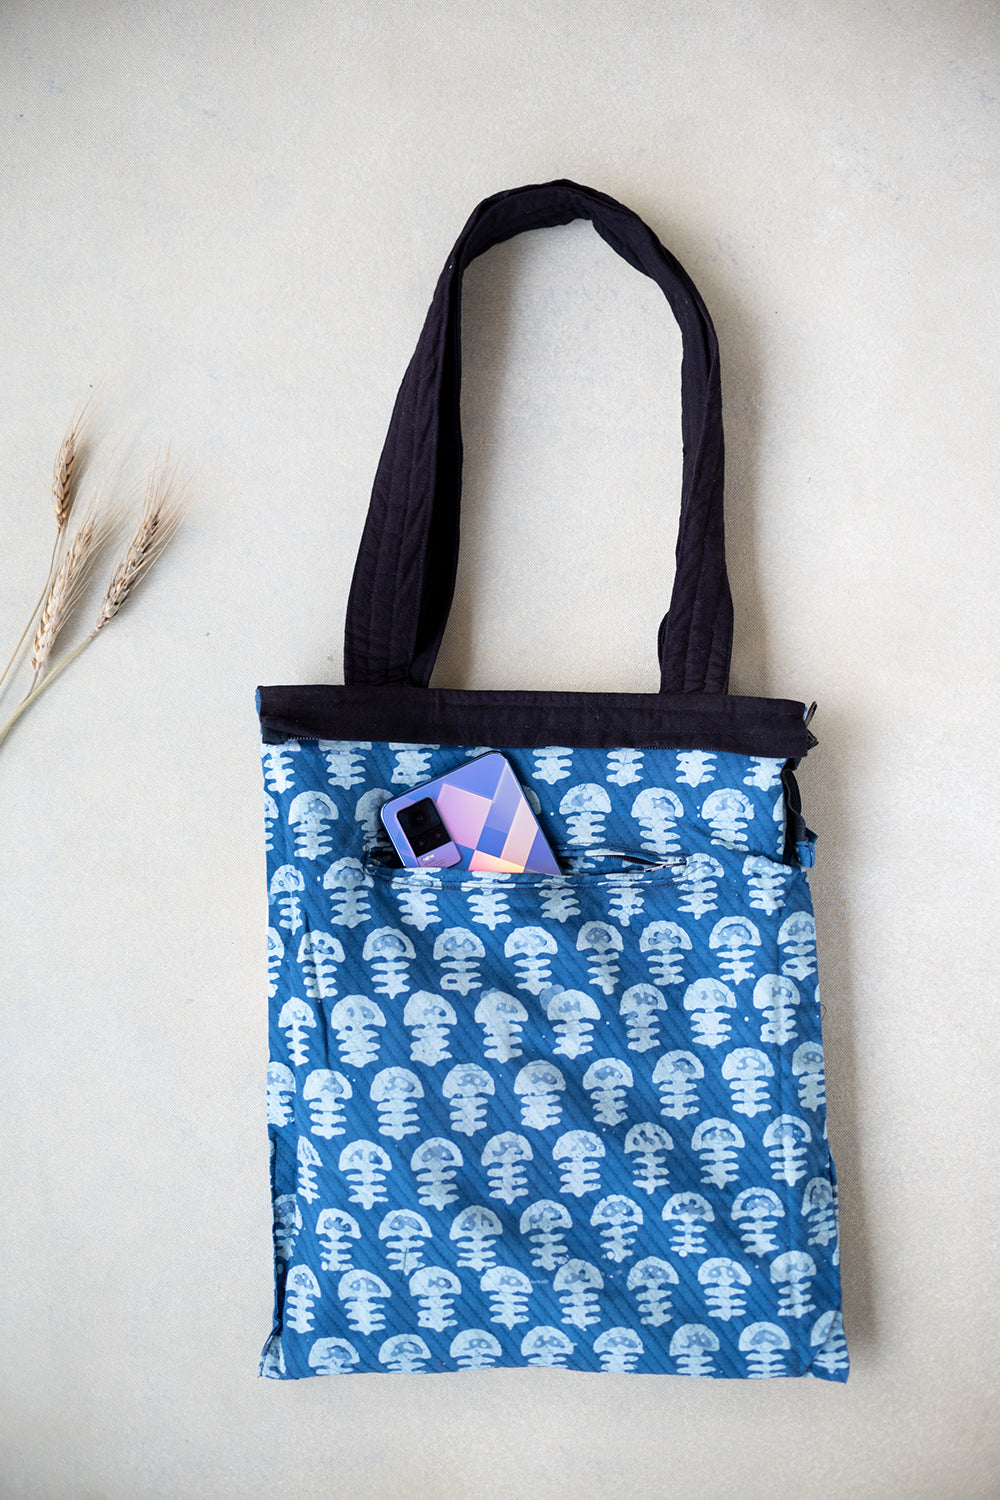 Black Kutch Embroidered Bag